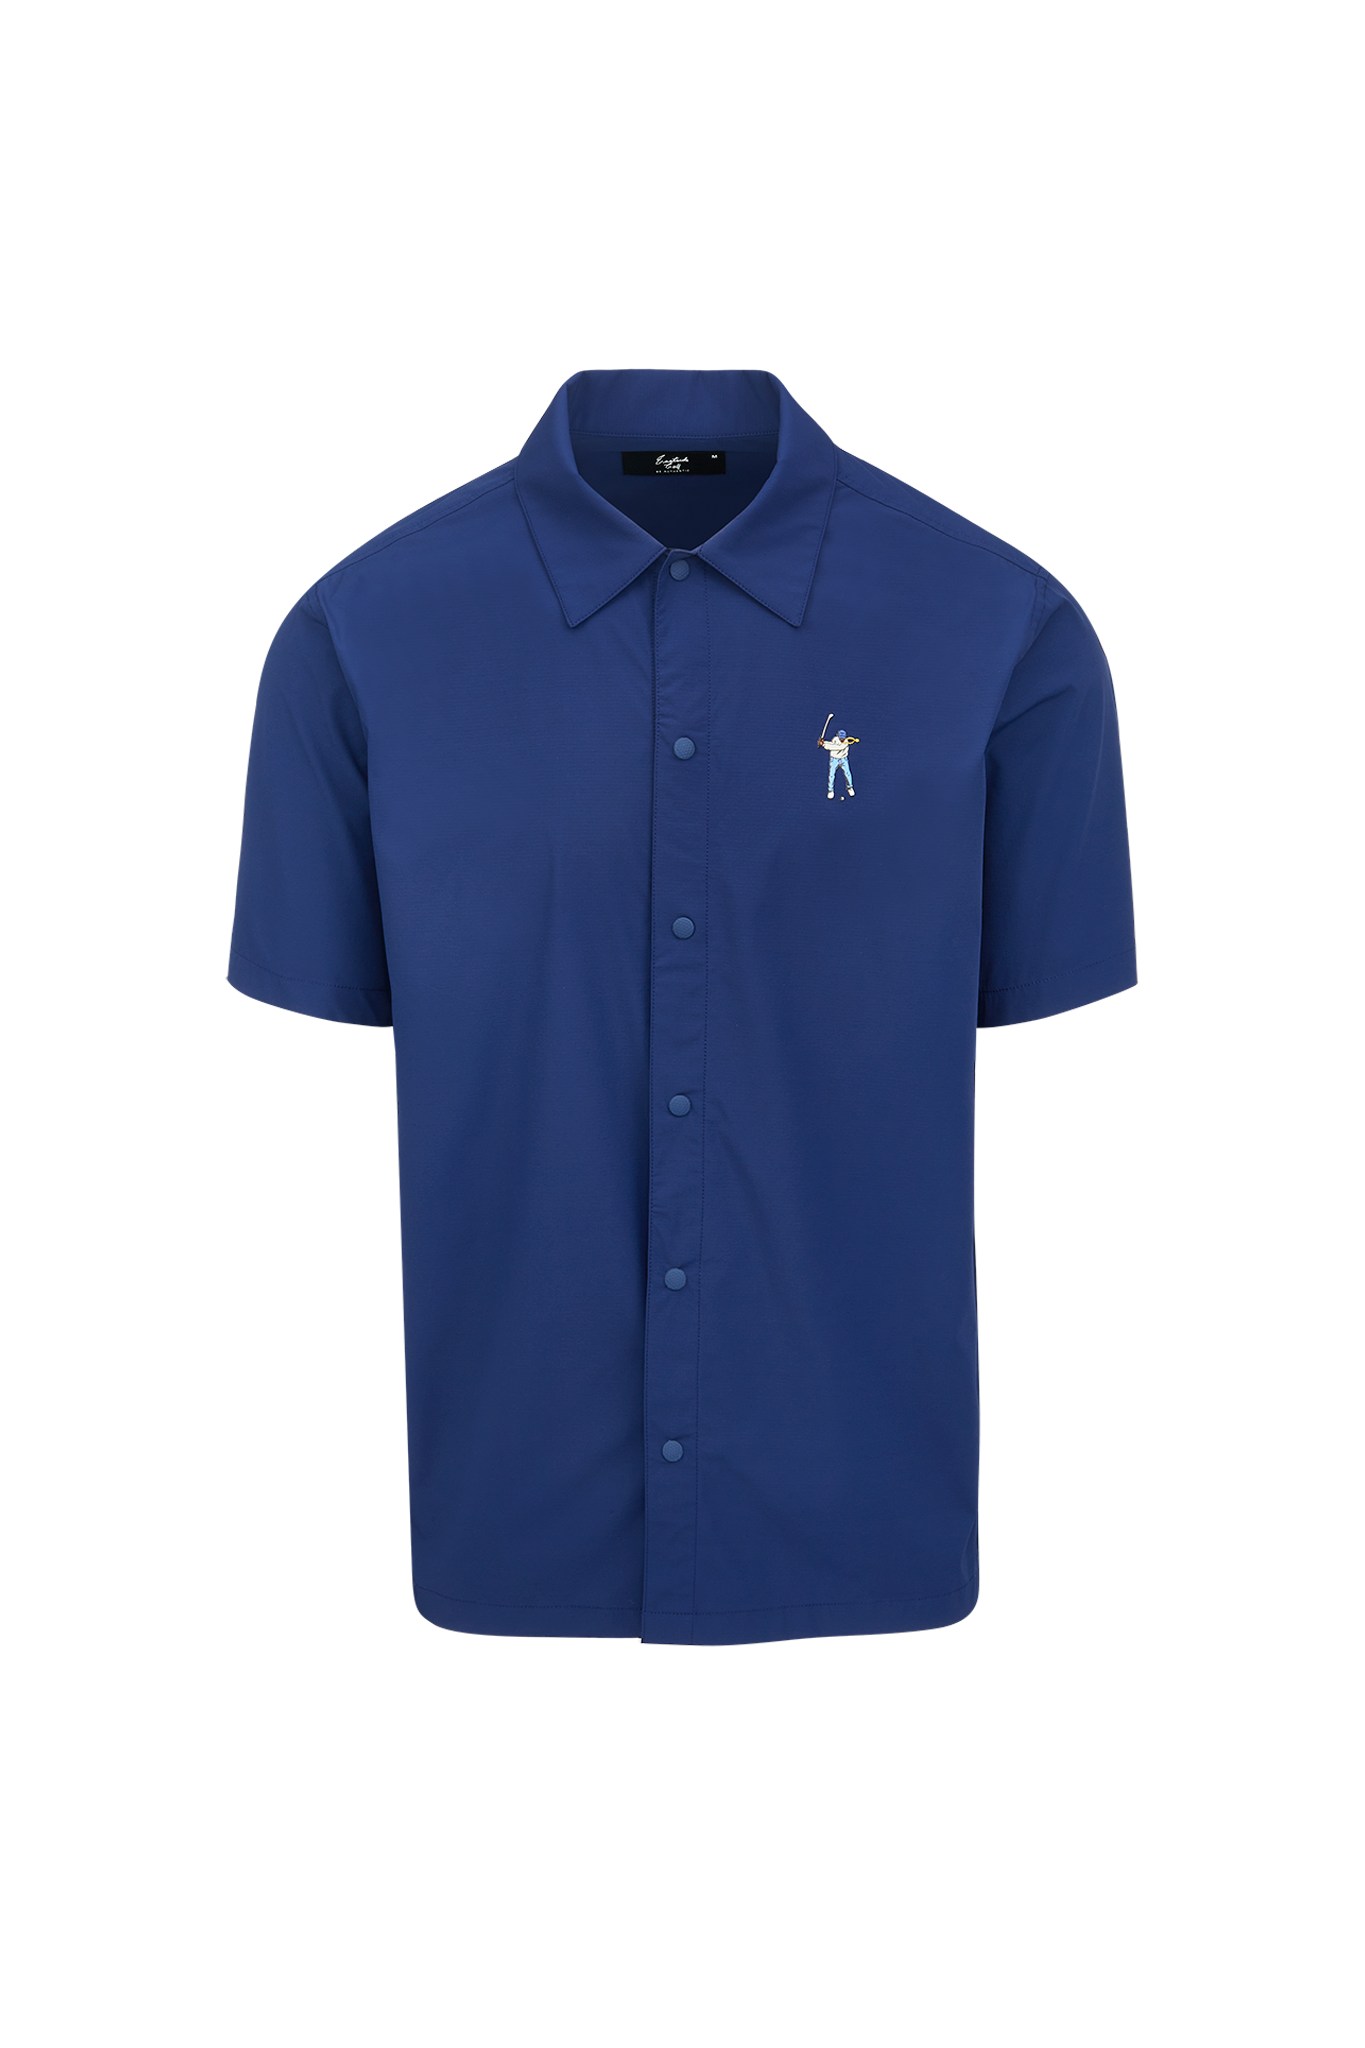 True Navy Eastside Golf Men's Micro Rip Stop Shirt